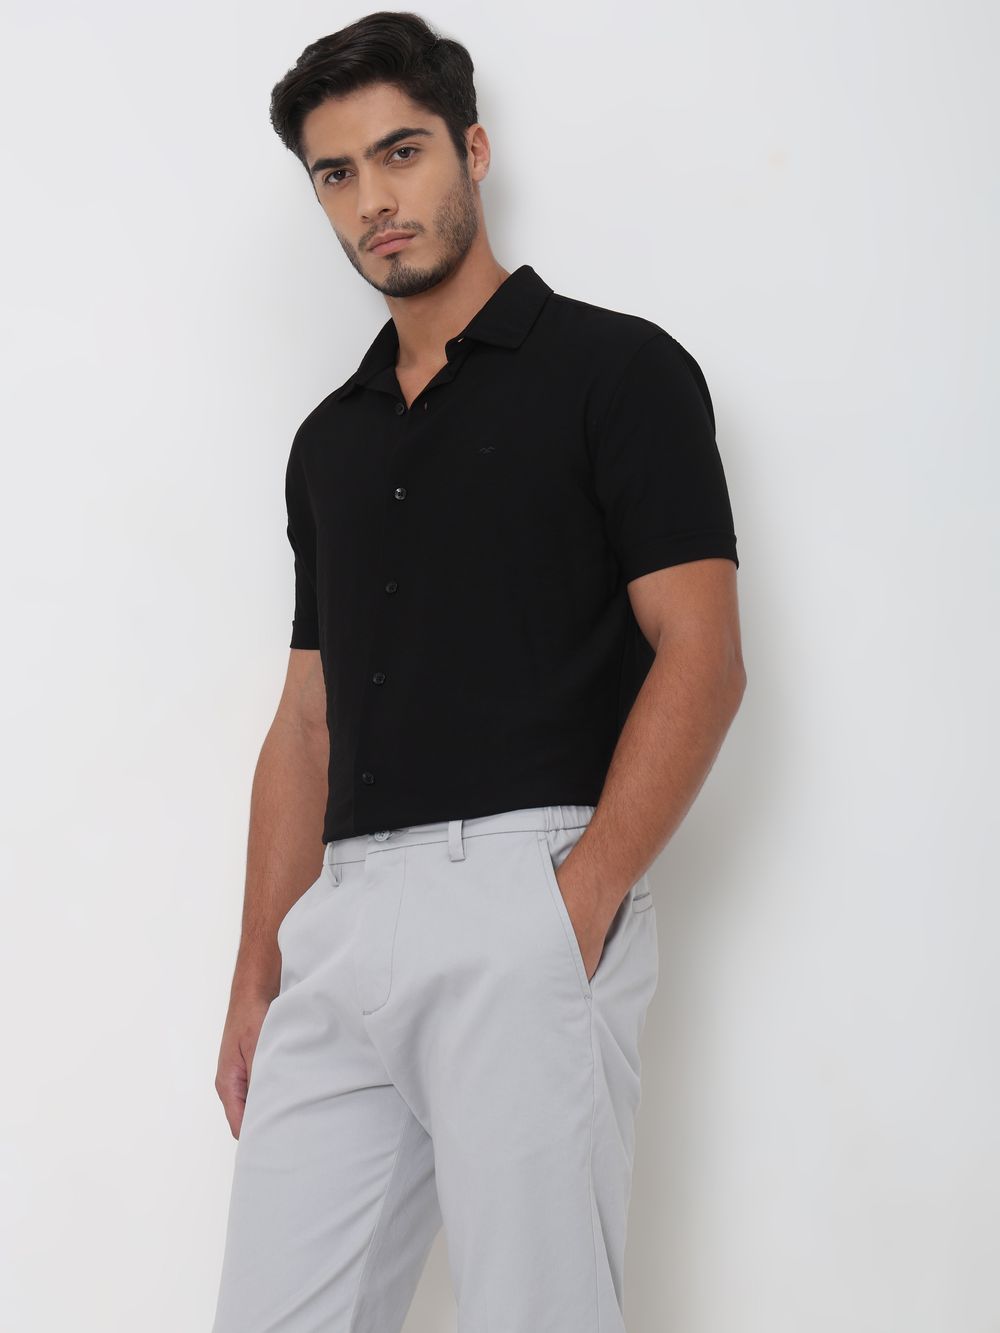 Black Textured Viscose Blend Plain Slim Fit Casual Shirt